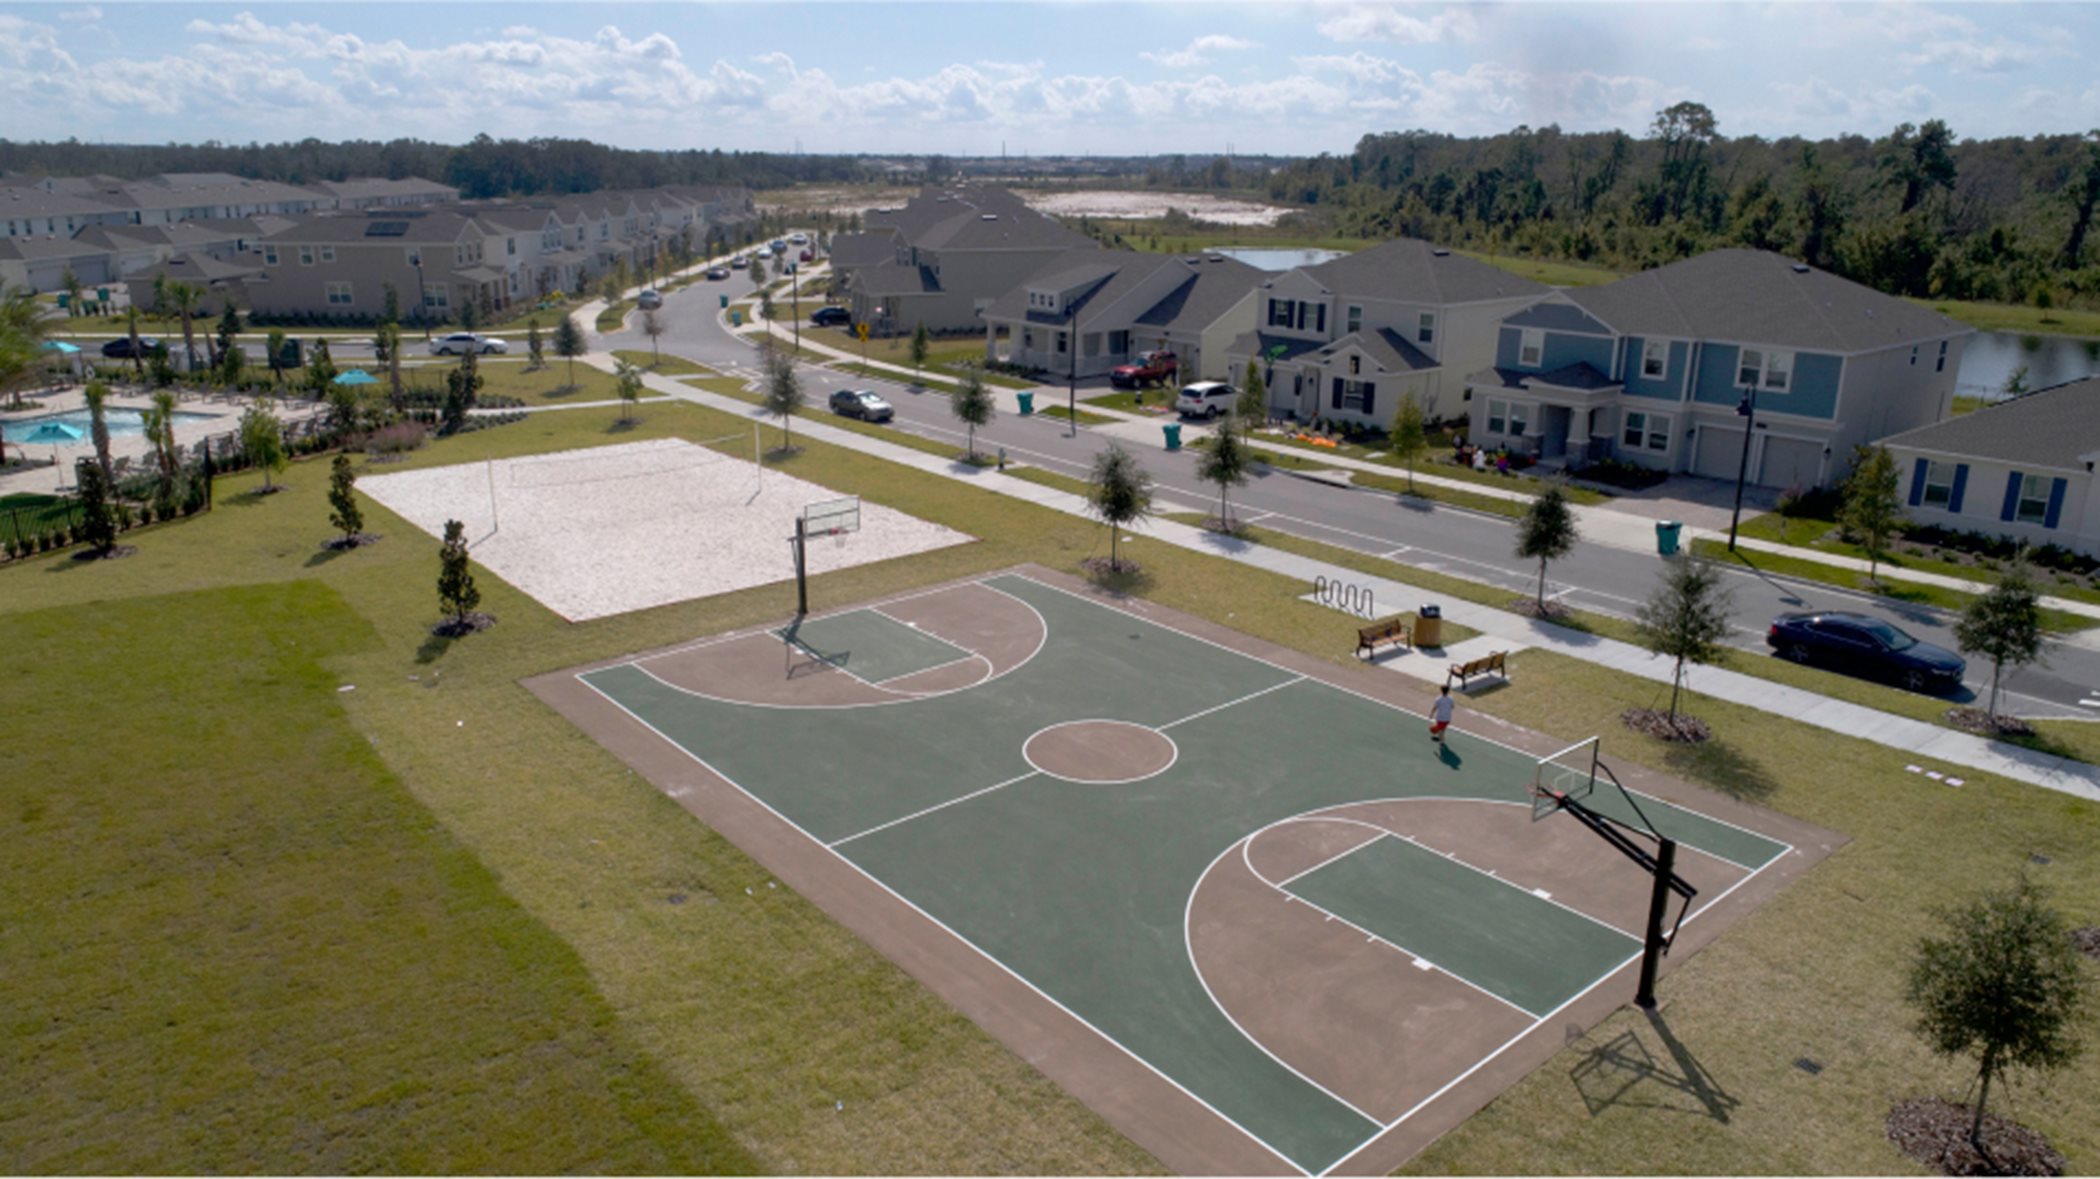 Storey Park basketball court